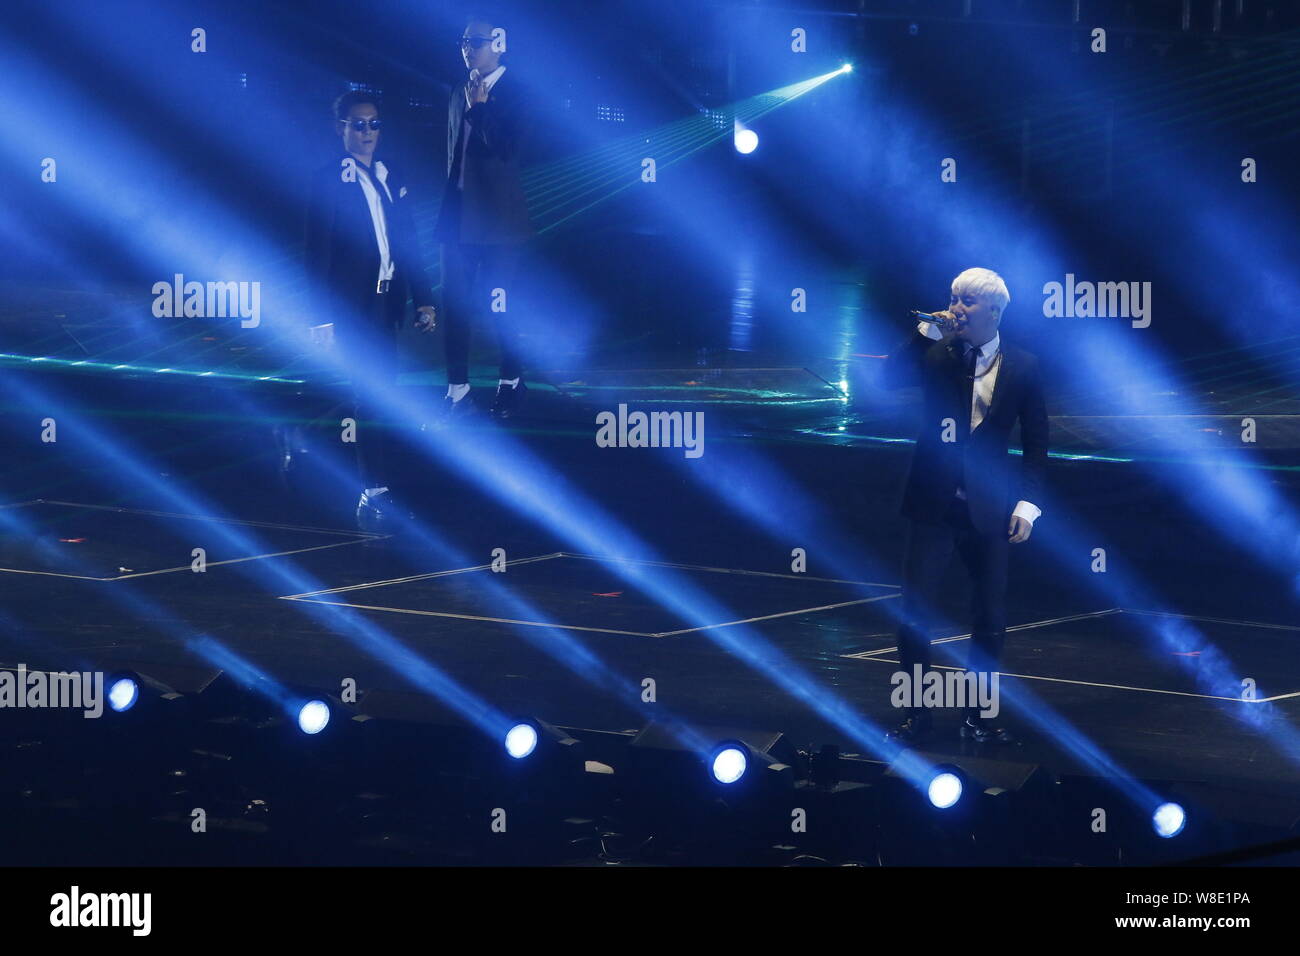 Members of South Korean boy group Bigbang or Big Bang perform at their concert in Macau, China, 24 October 2015. Stock Photo